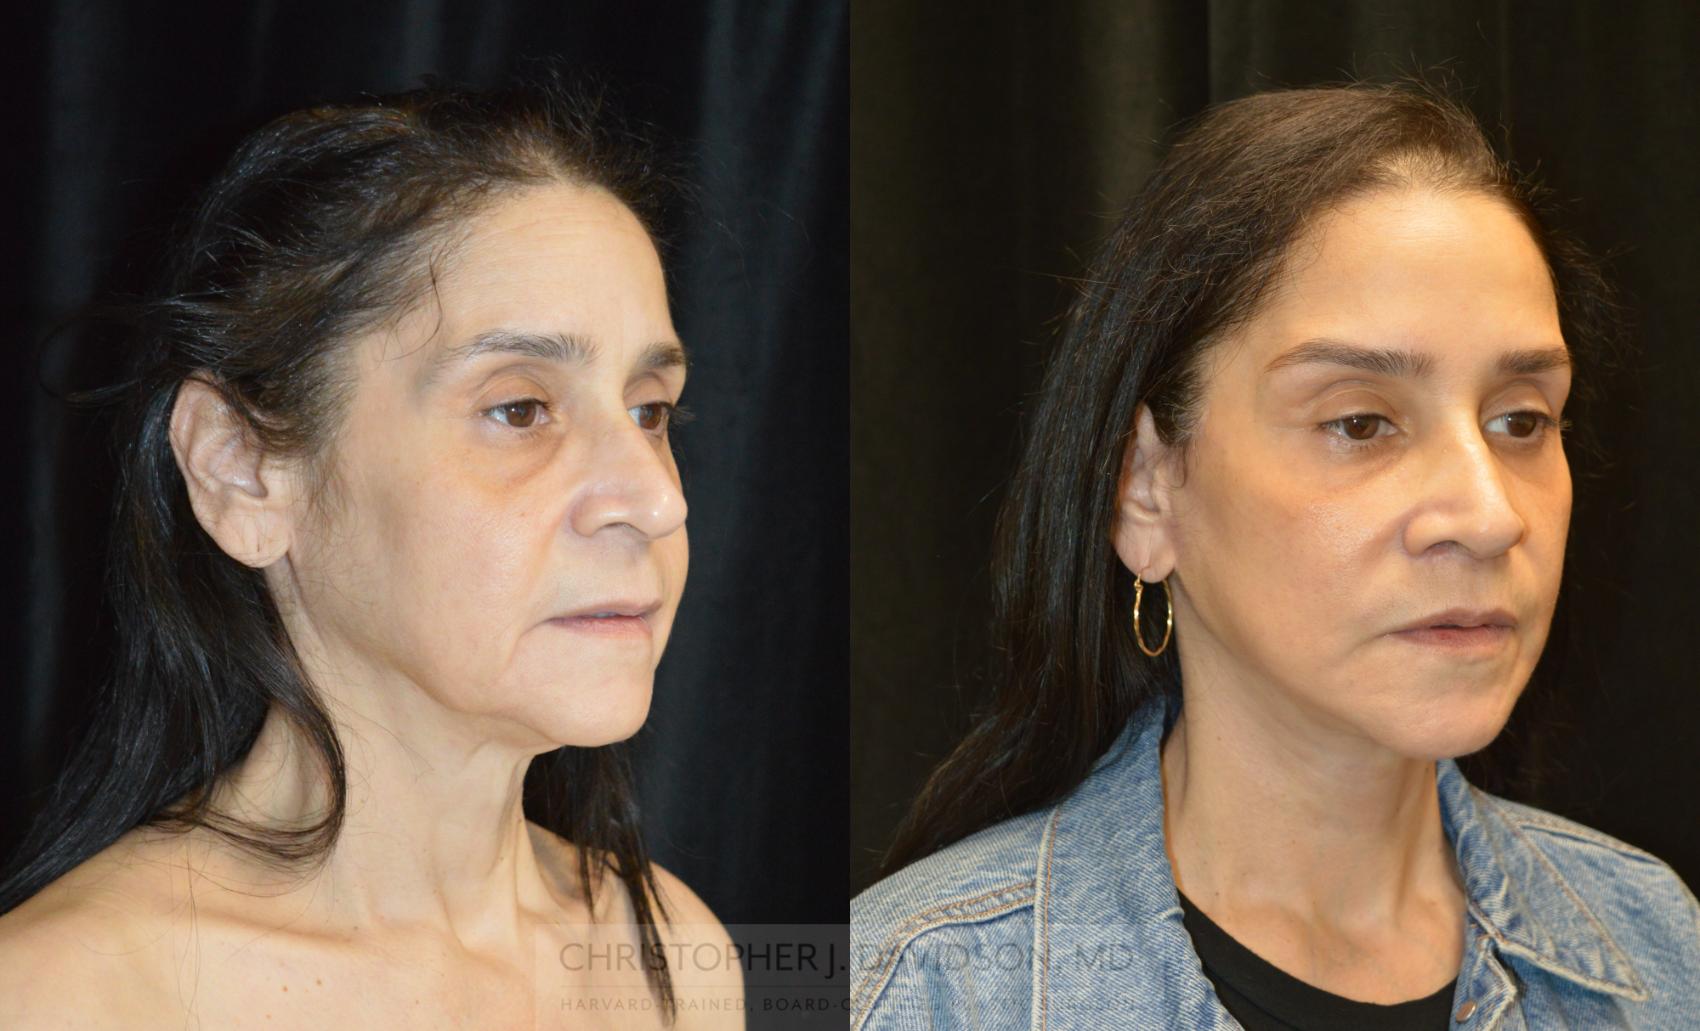 Facelift Surgery Case 266 Before & After Right Oblique | Wellesley, MA | Christopher J. Davidson, MD